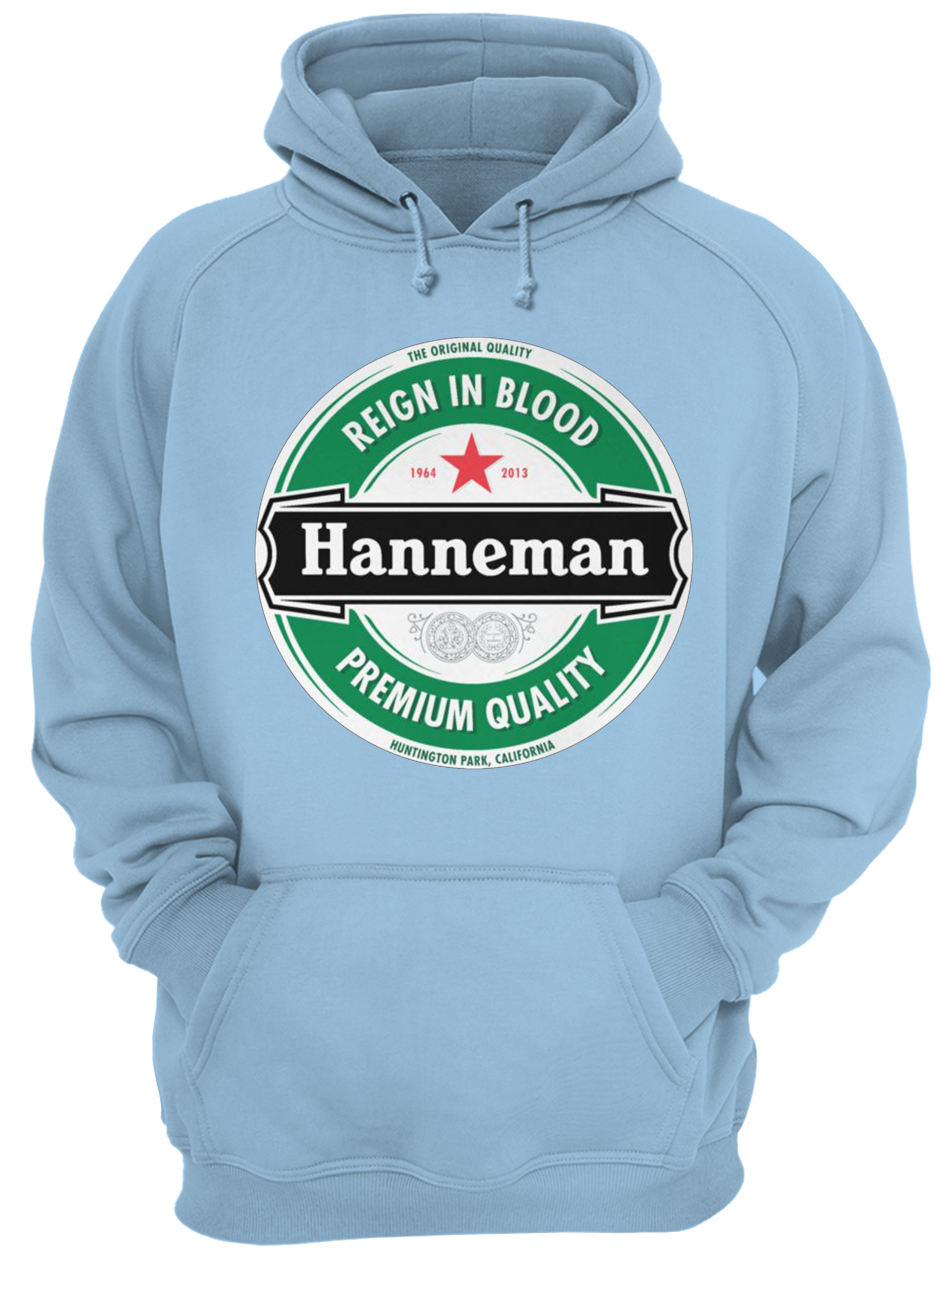 The original quality reign in blood hanneman premium quality hoodie